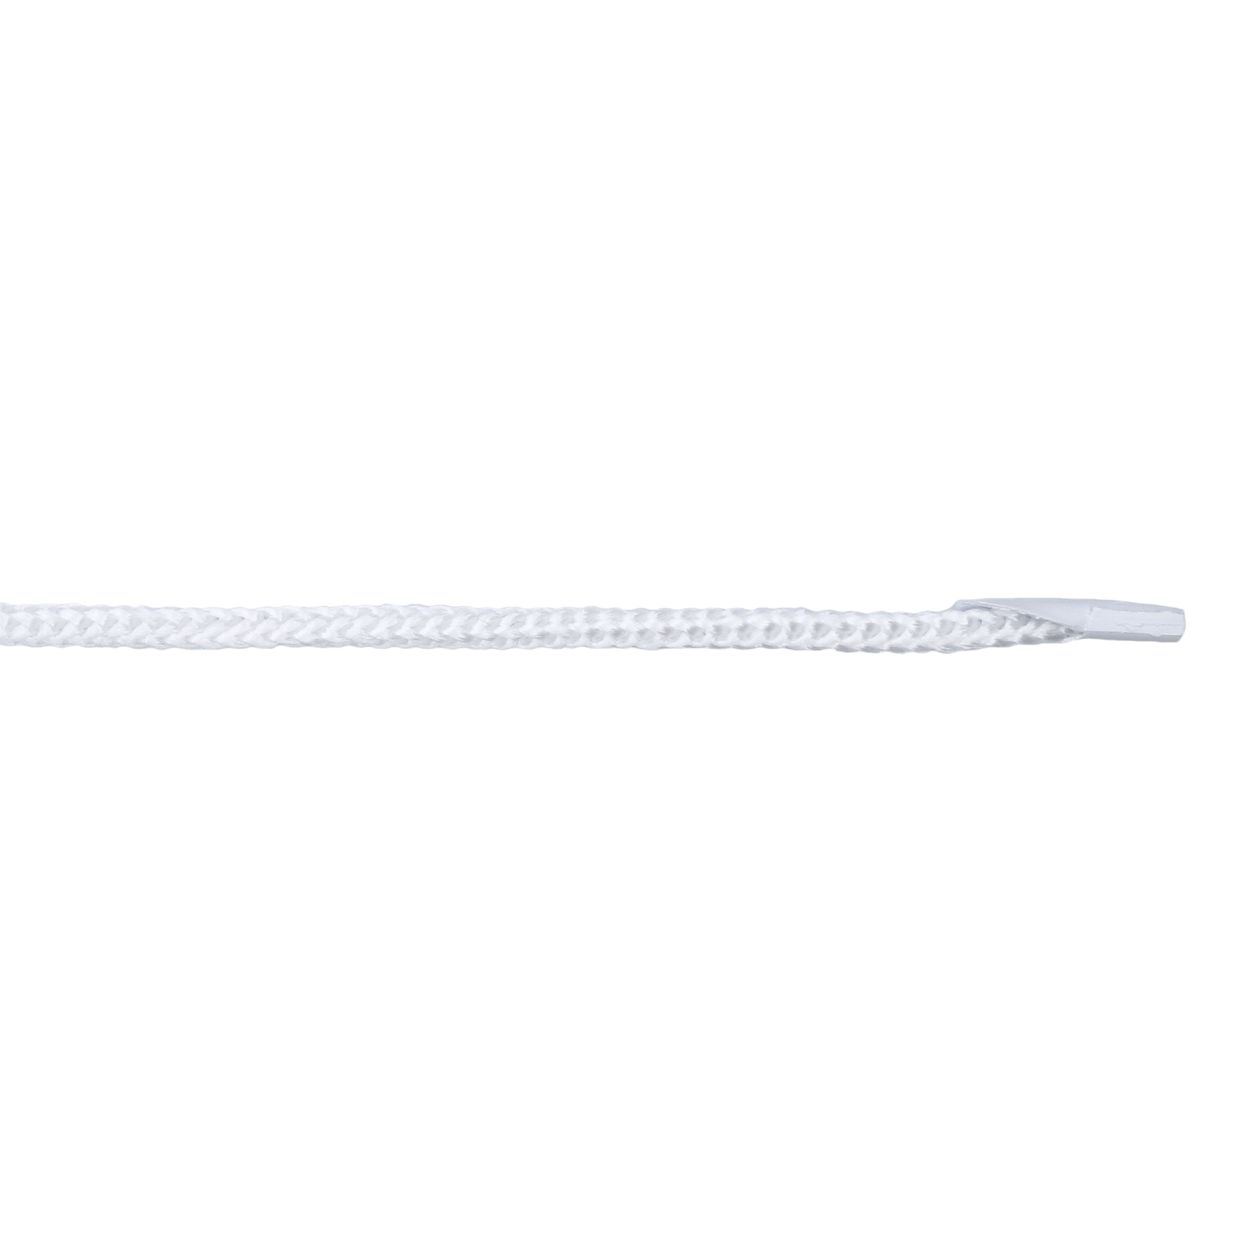 Шнурок для пакетов с крючком арт. 4В511 п/п, диам. 4 мм, дл. 35 см, № 001 ДС белый (уп. 50 пар)